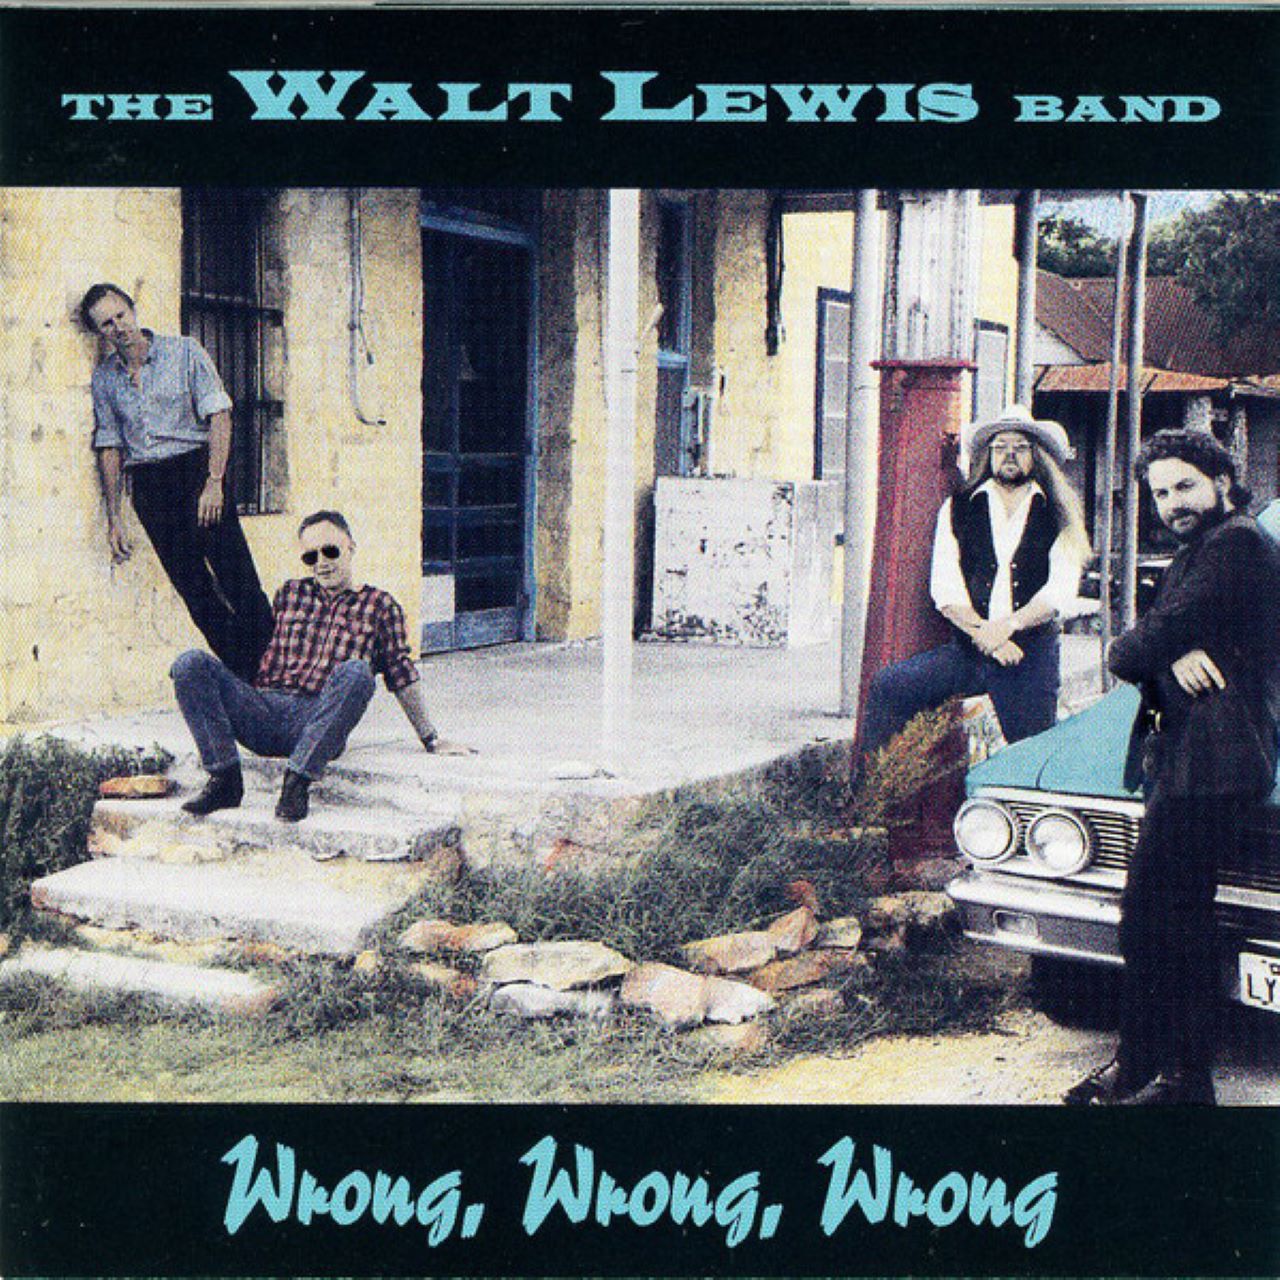 Walt Lewis Band - Wrong, Wrong, Wrong cover album